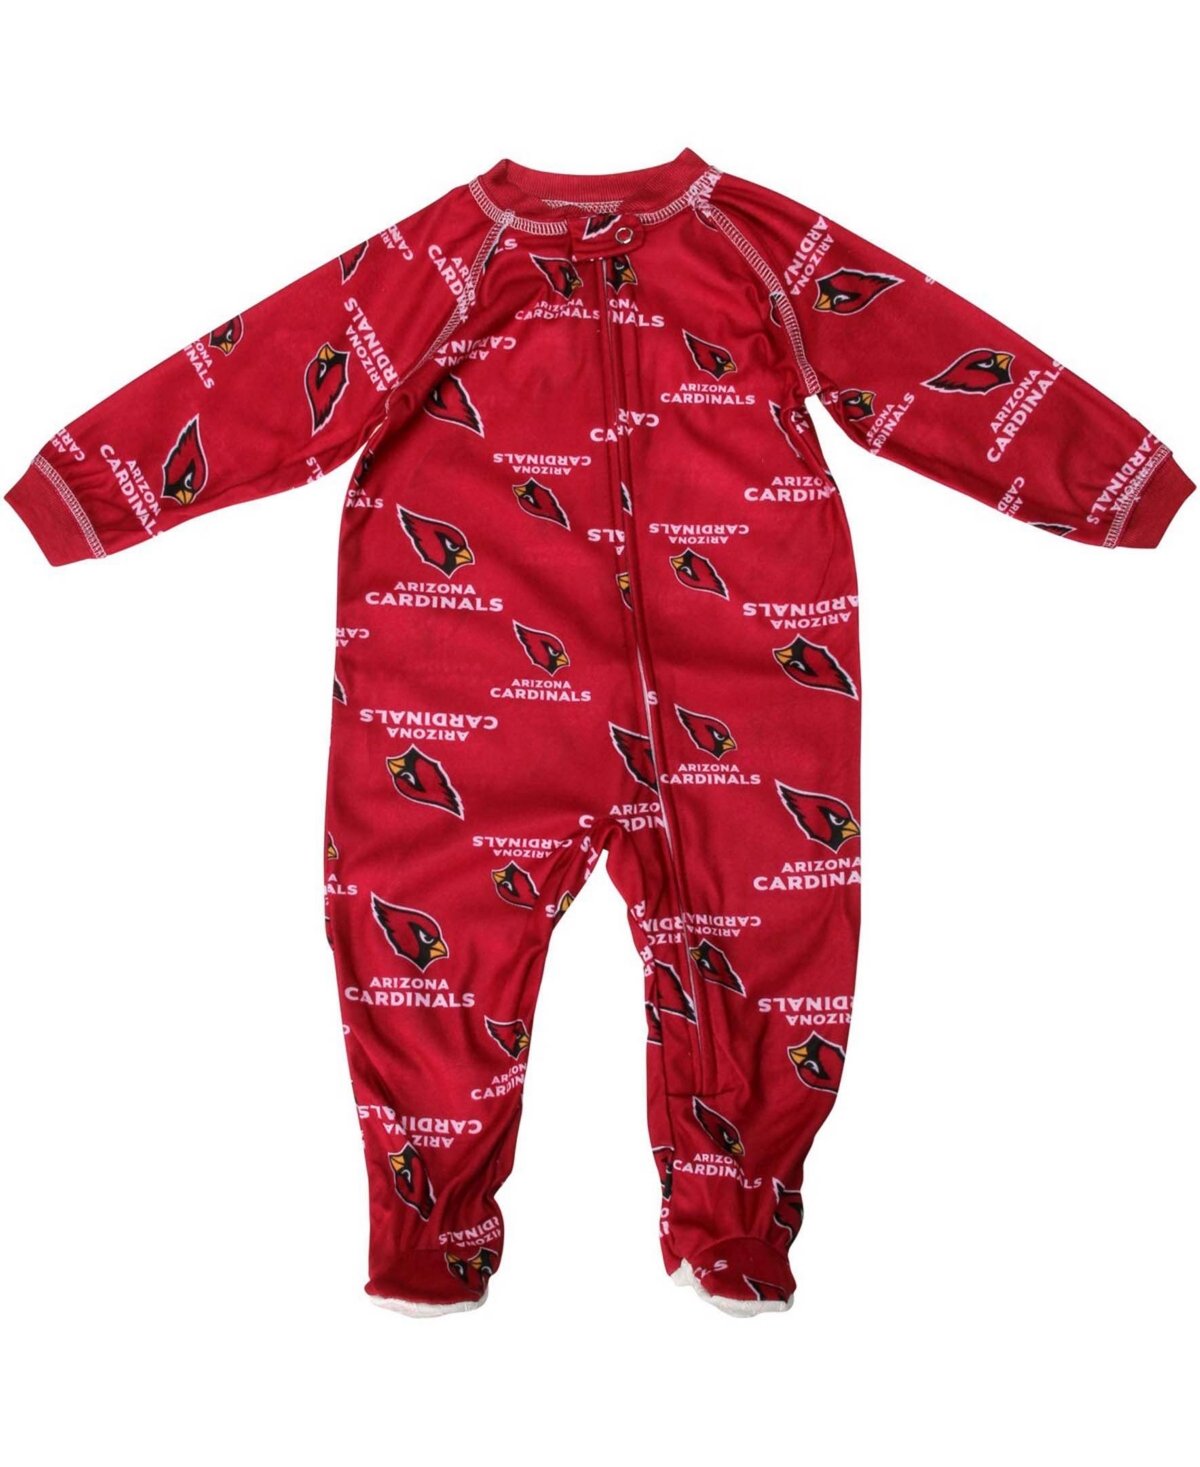 Outerstuff Babies' Infant Arizona Cardinals Newborn Full Zip Raglan Coverall